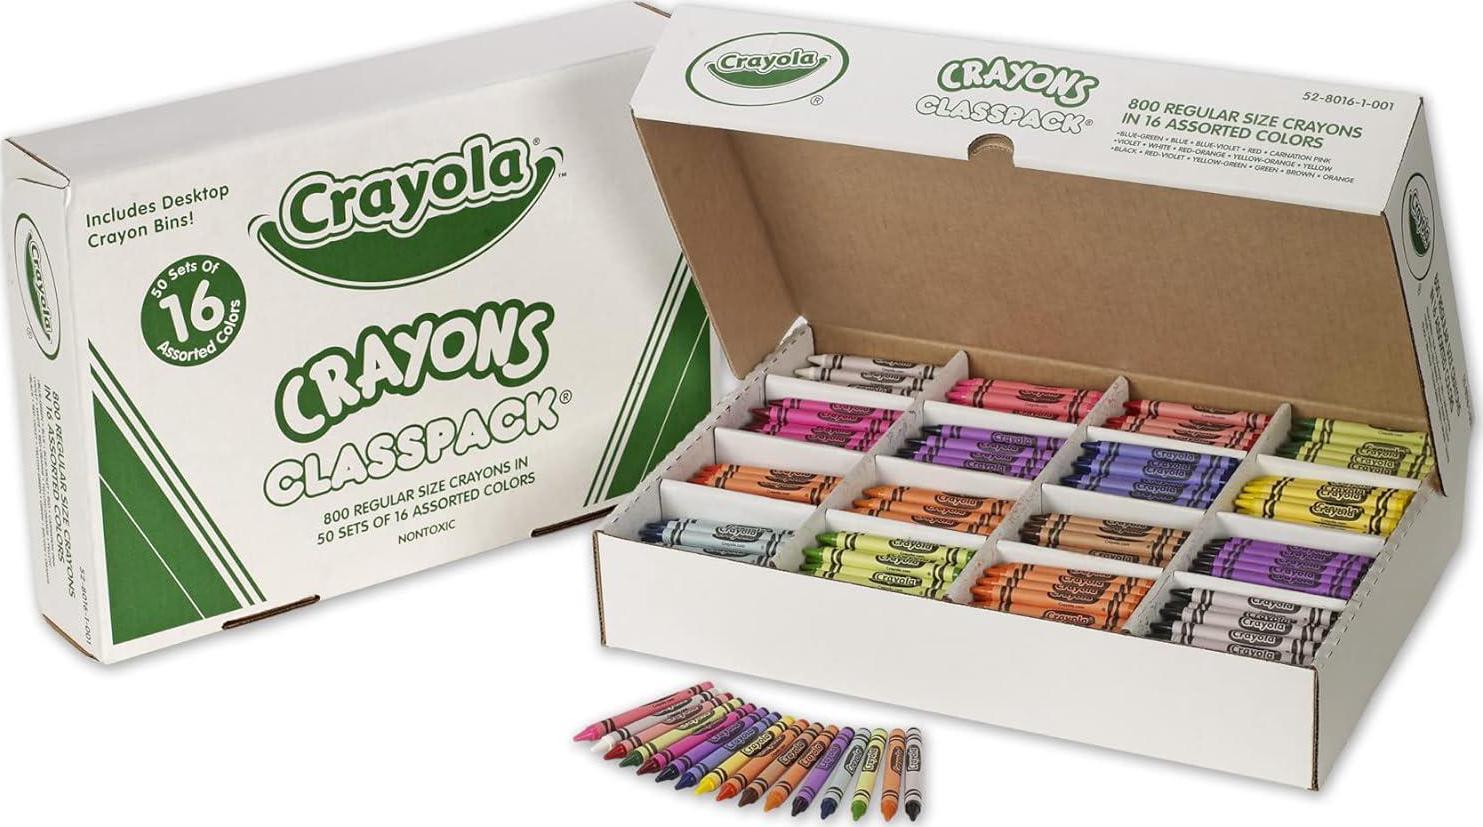 Crayola Crayon Classpack, 400 count, bulk construction paper crayons